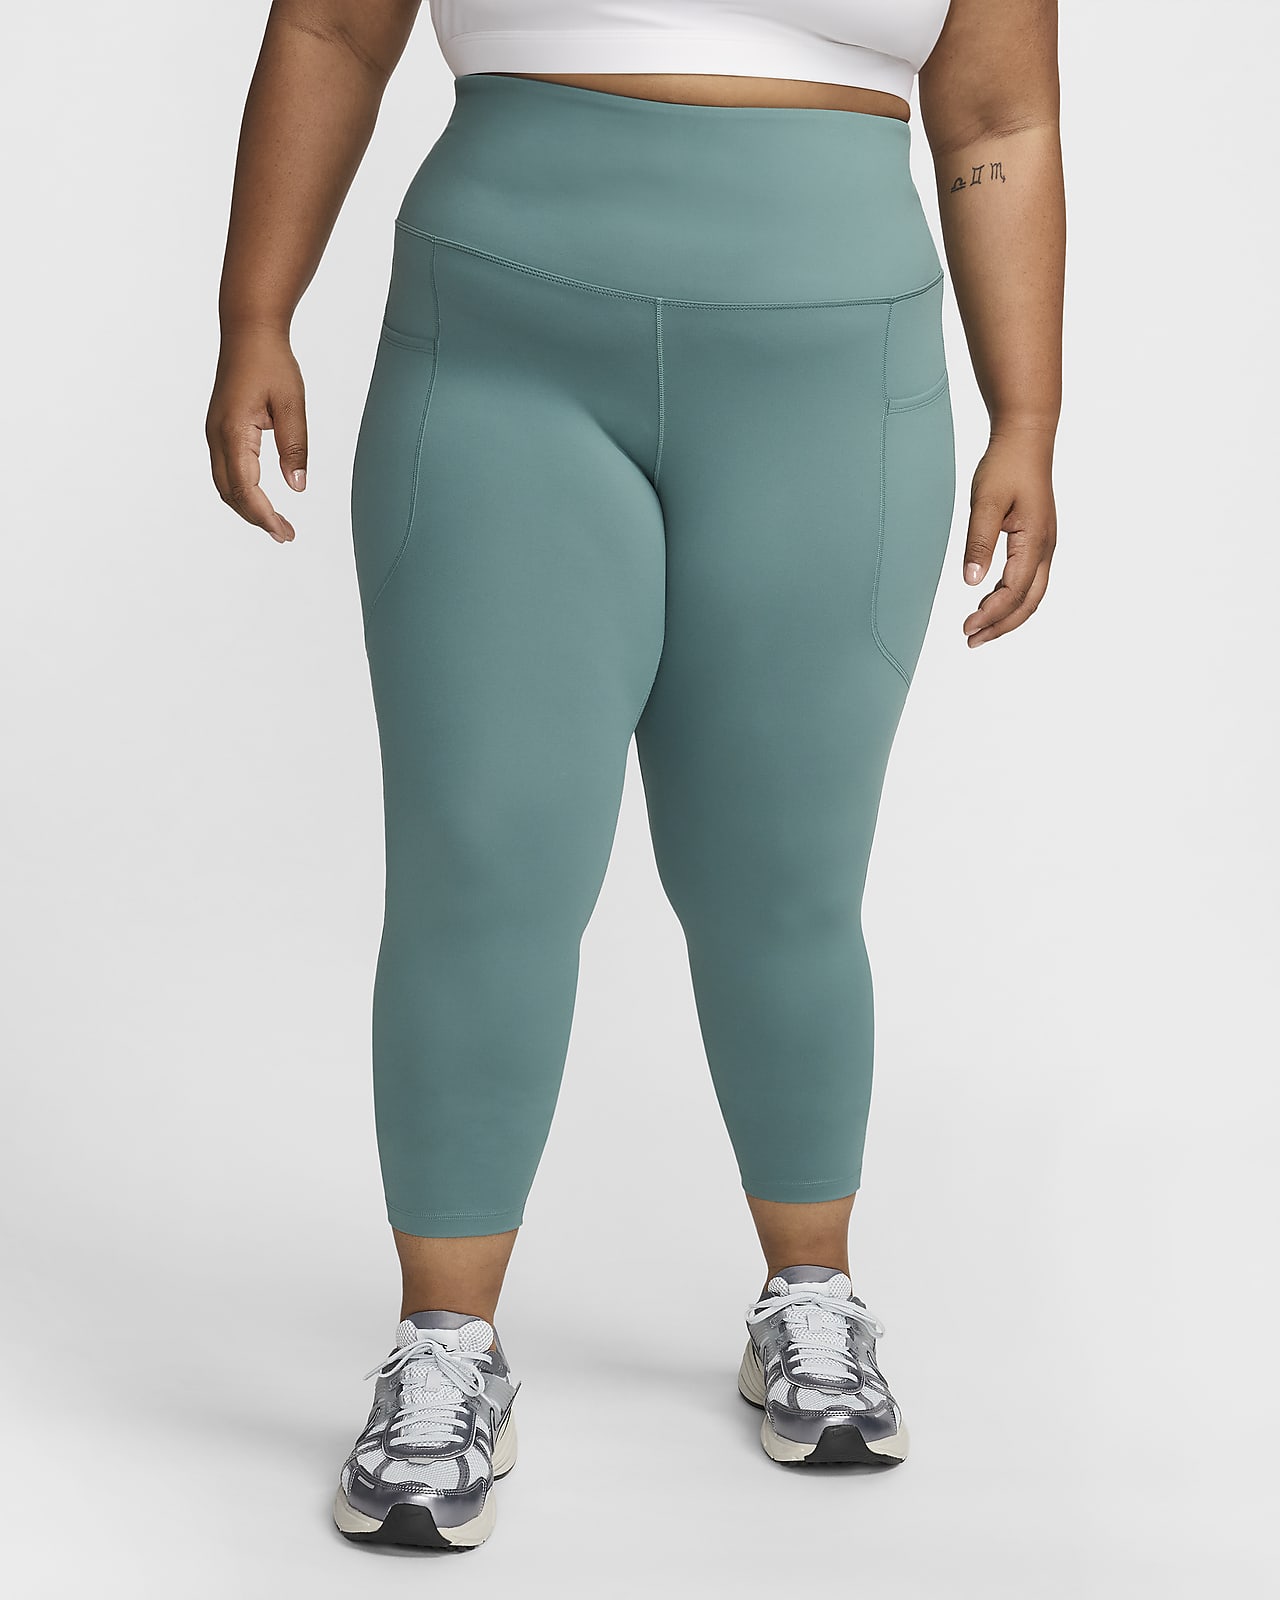 Nike One Women's High-Waisted 7/8 Leggings with Pockets (Plus Size). Nike .com